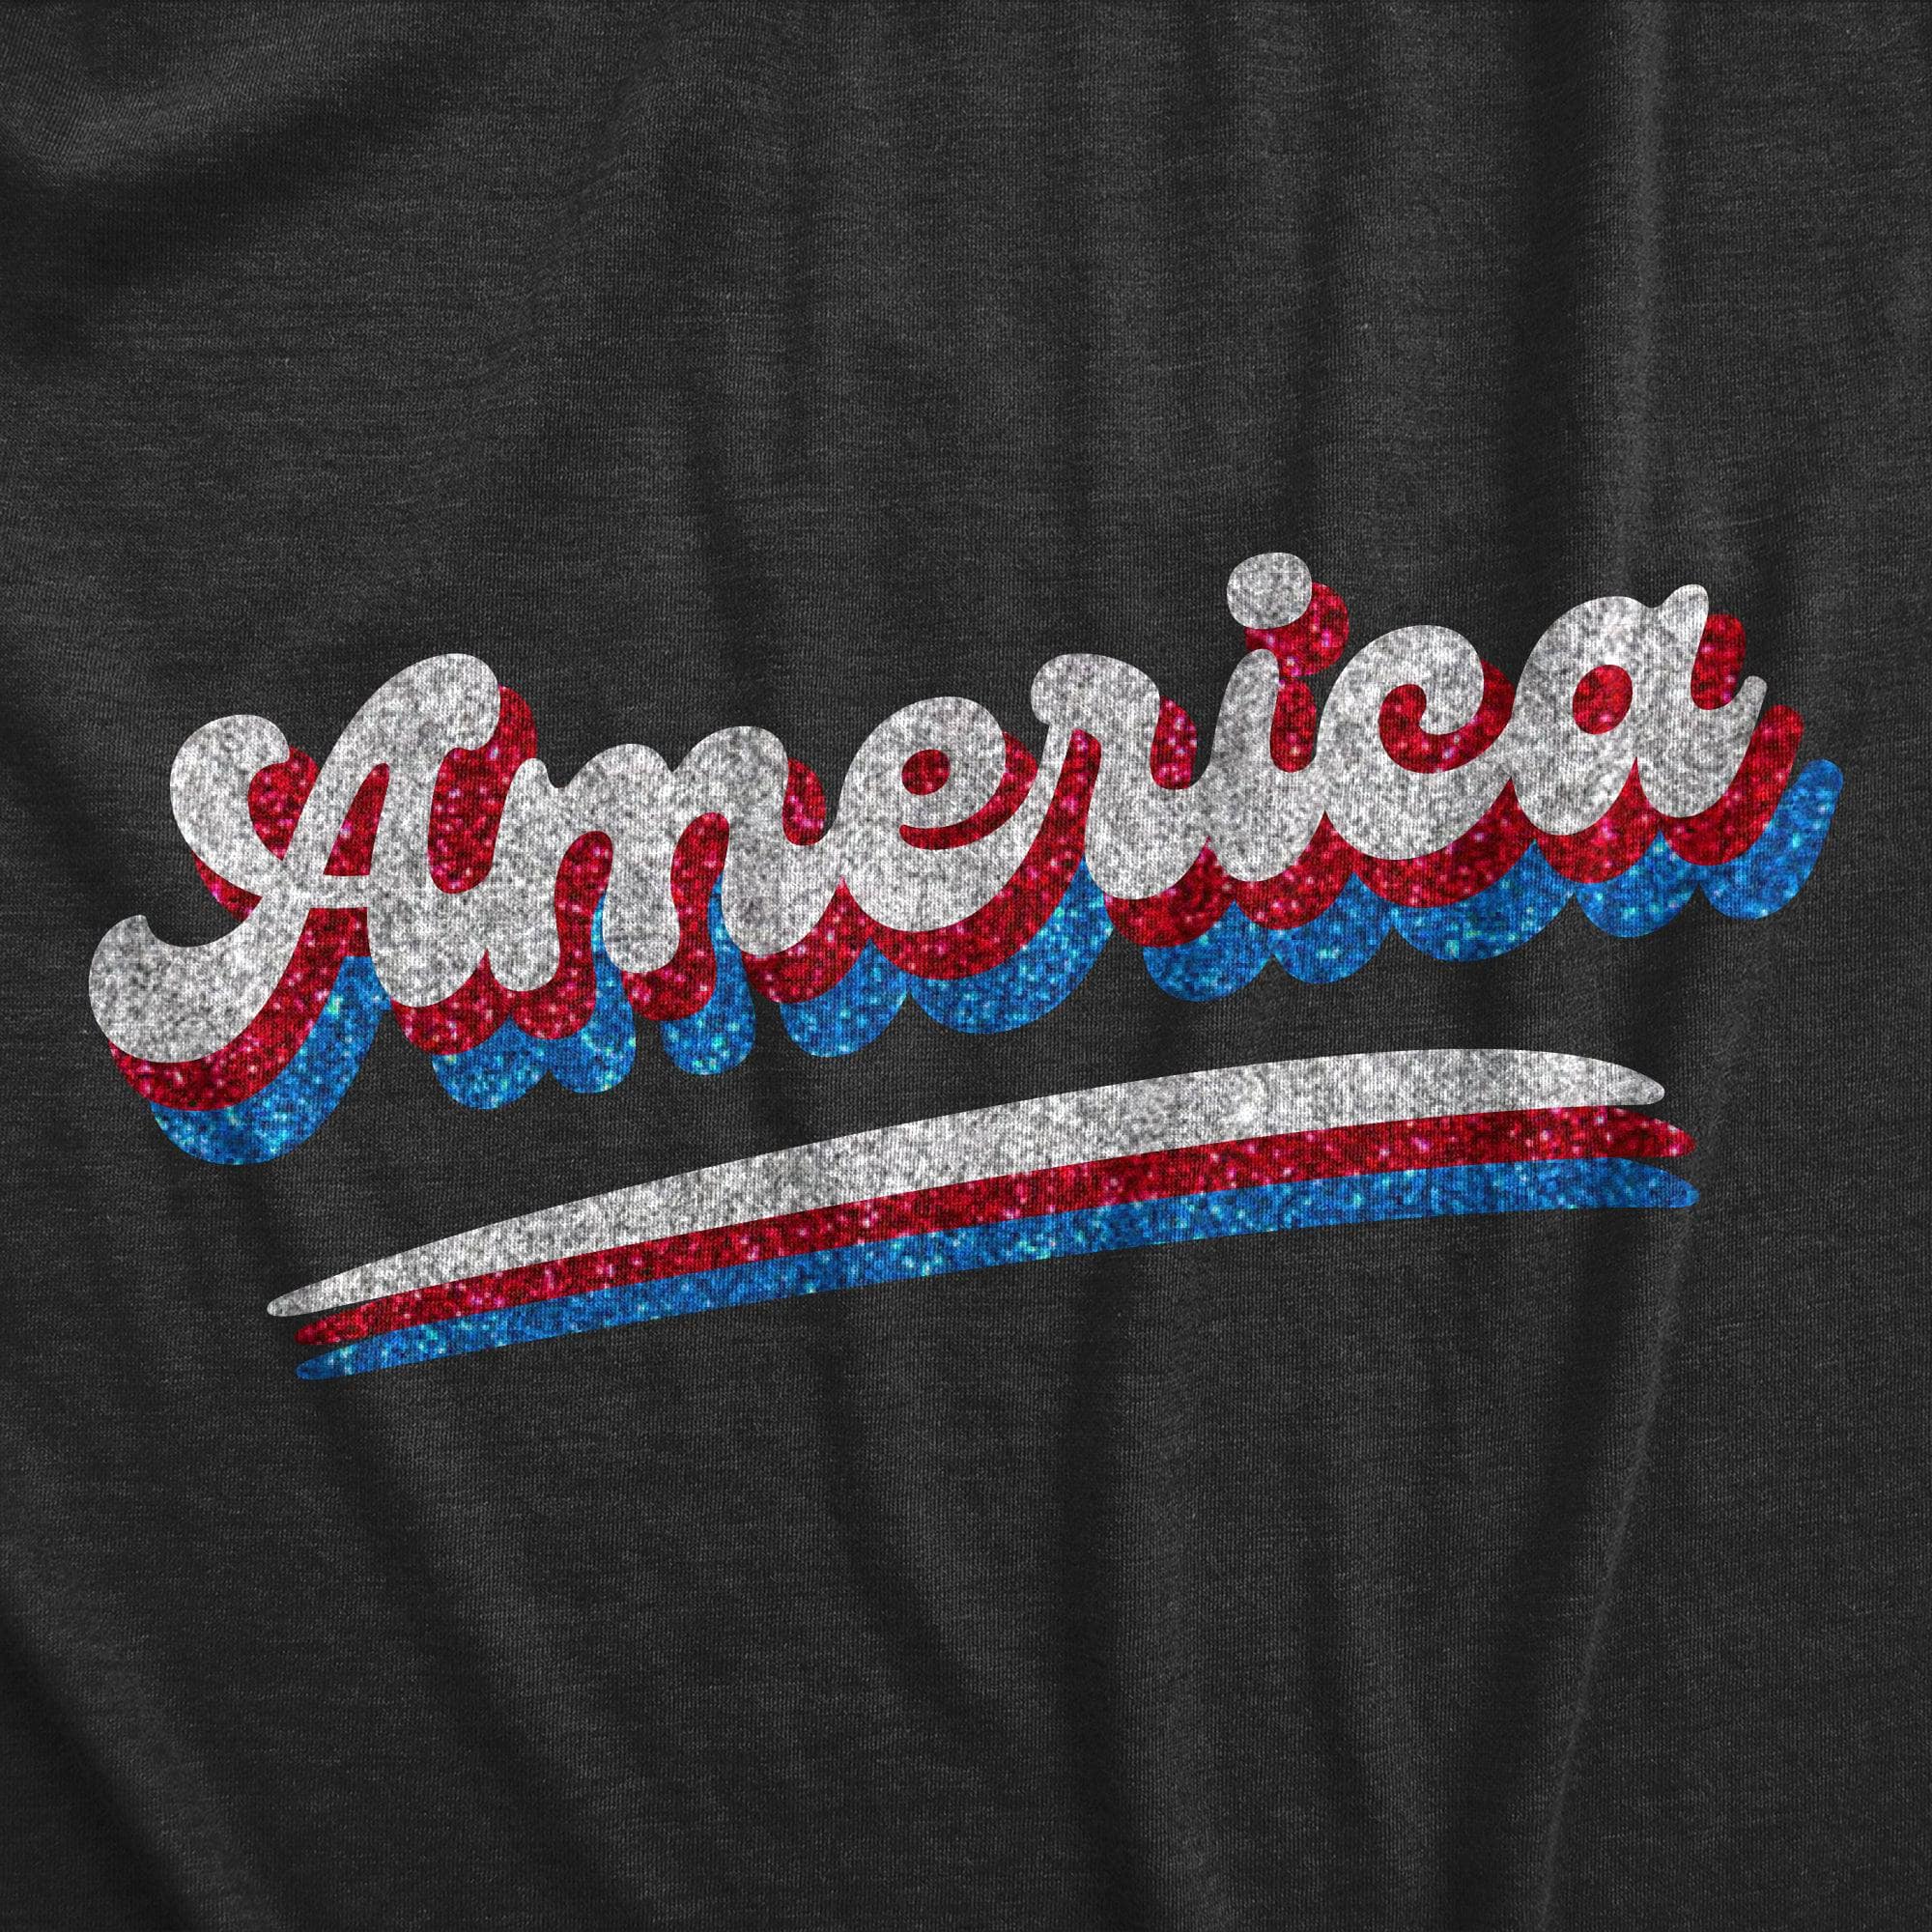 America Retro Glitter Women's Tshirt  -  Crazy Dog T-Shirts